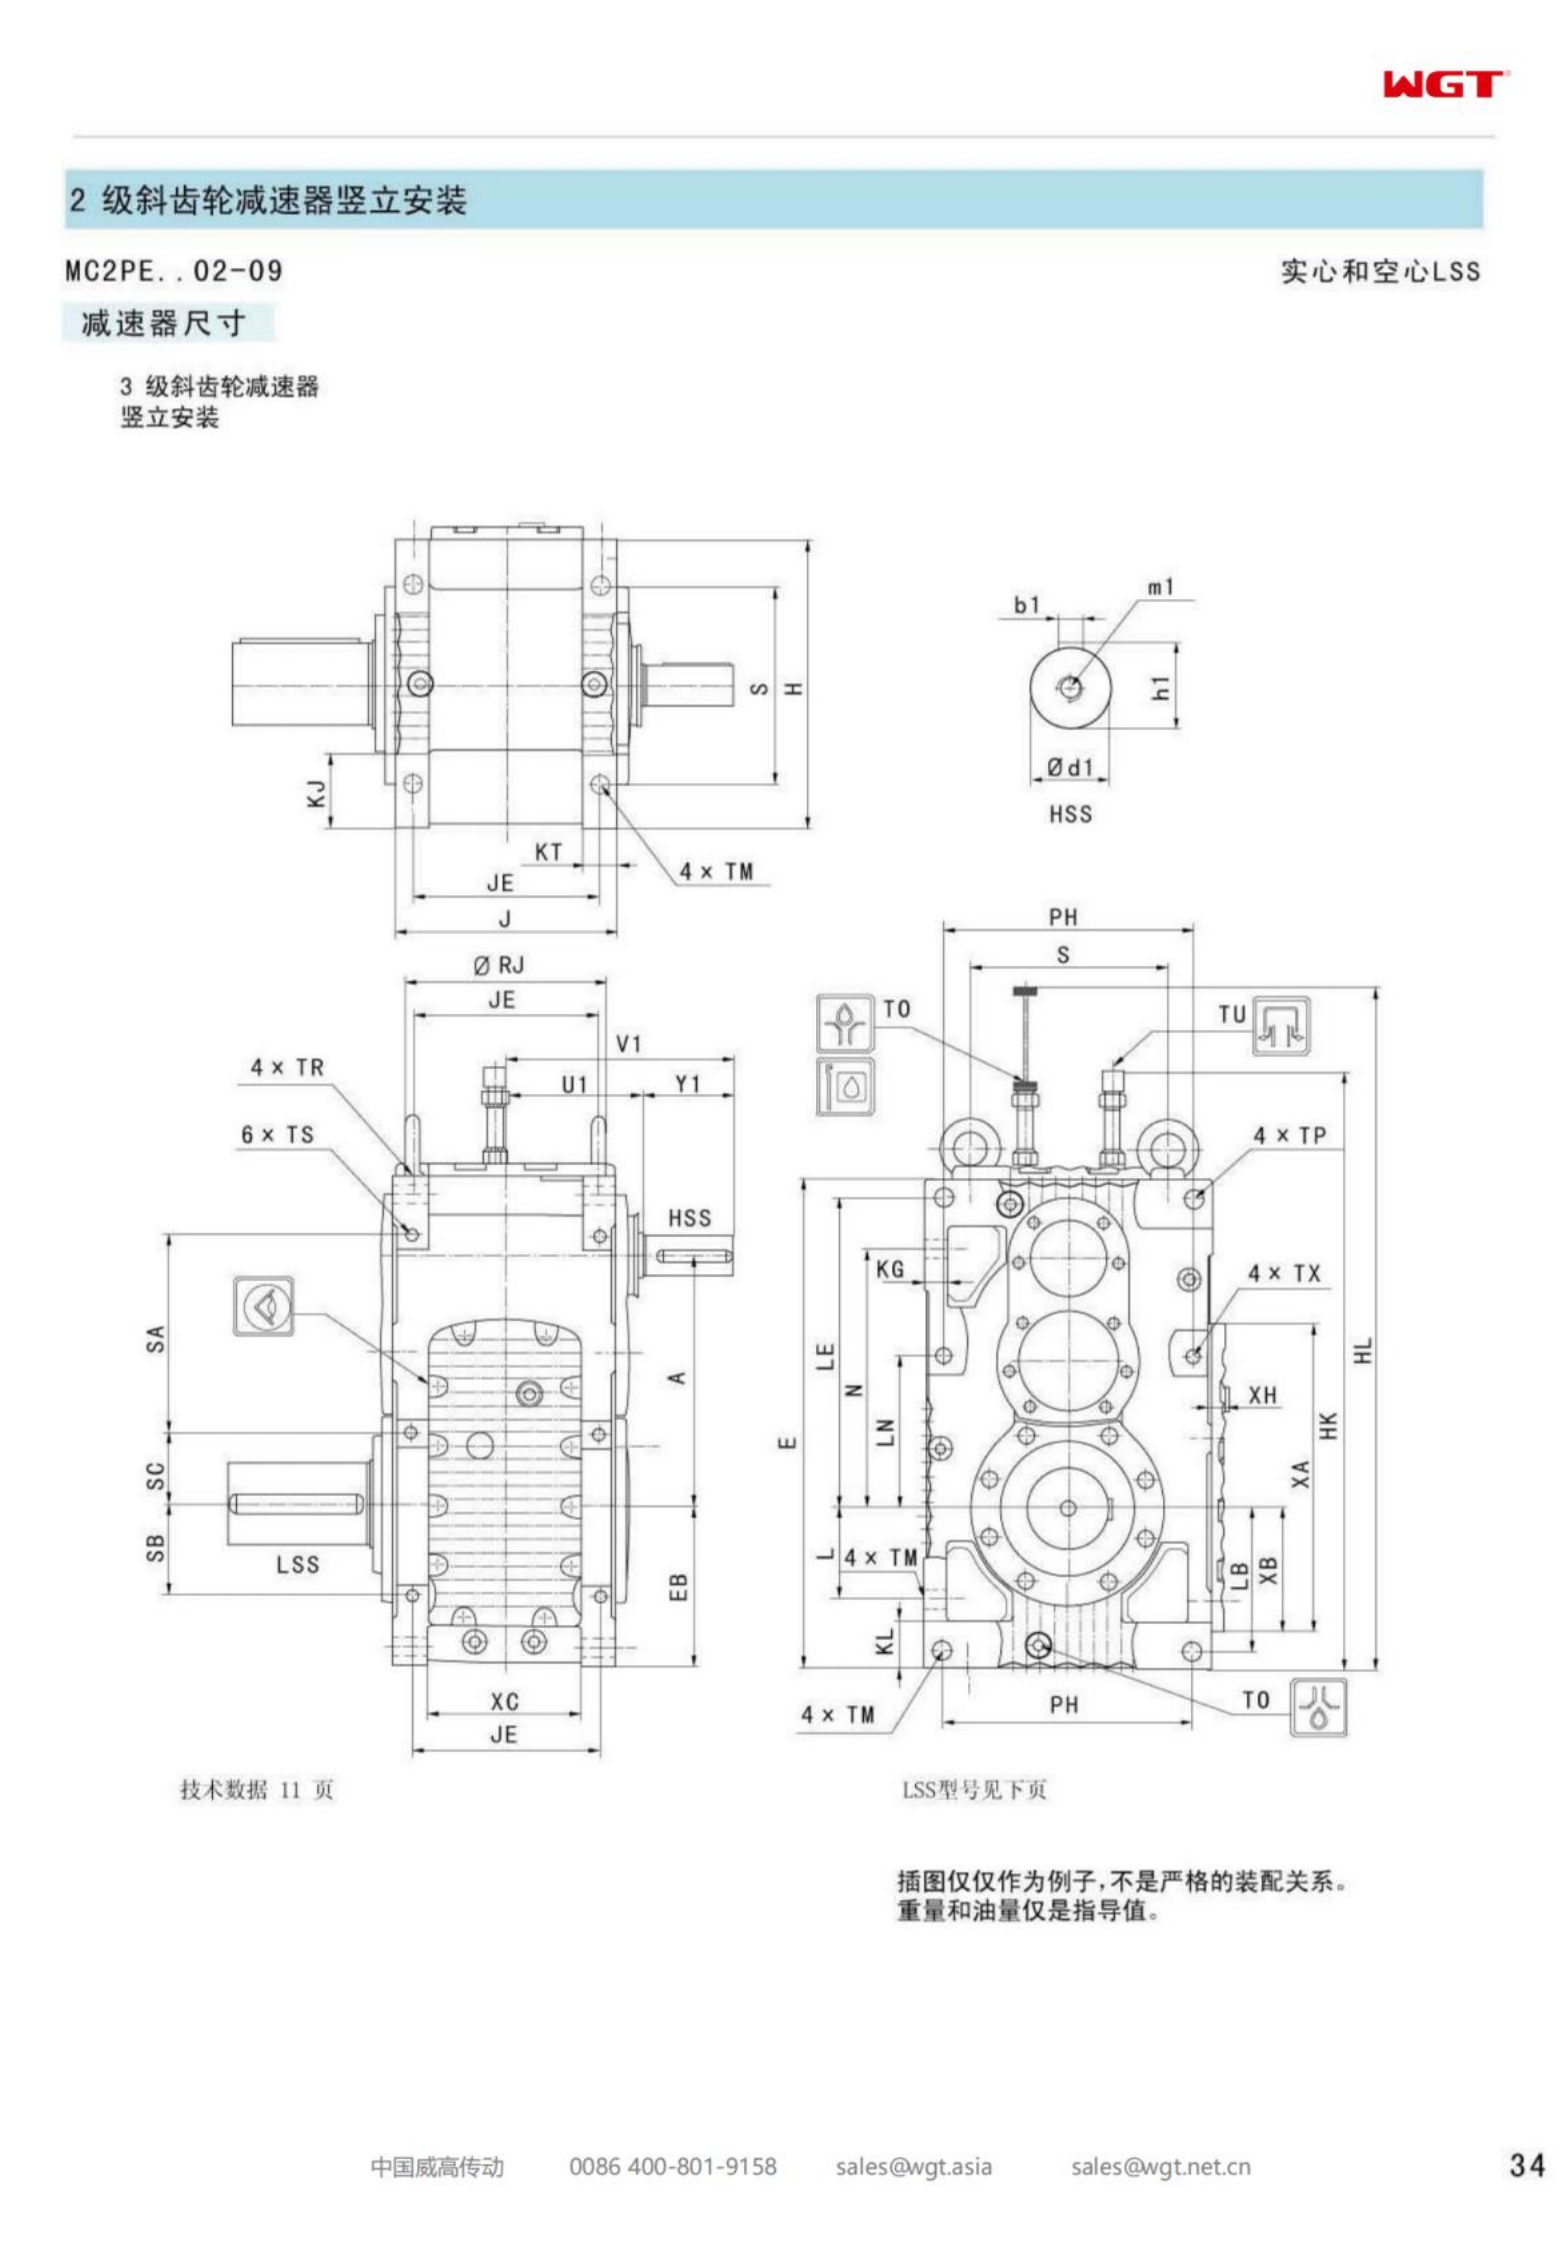 MC2PEST02 replaces _SEW_MC_Series gearbox (patent)